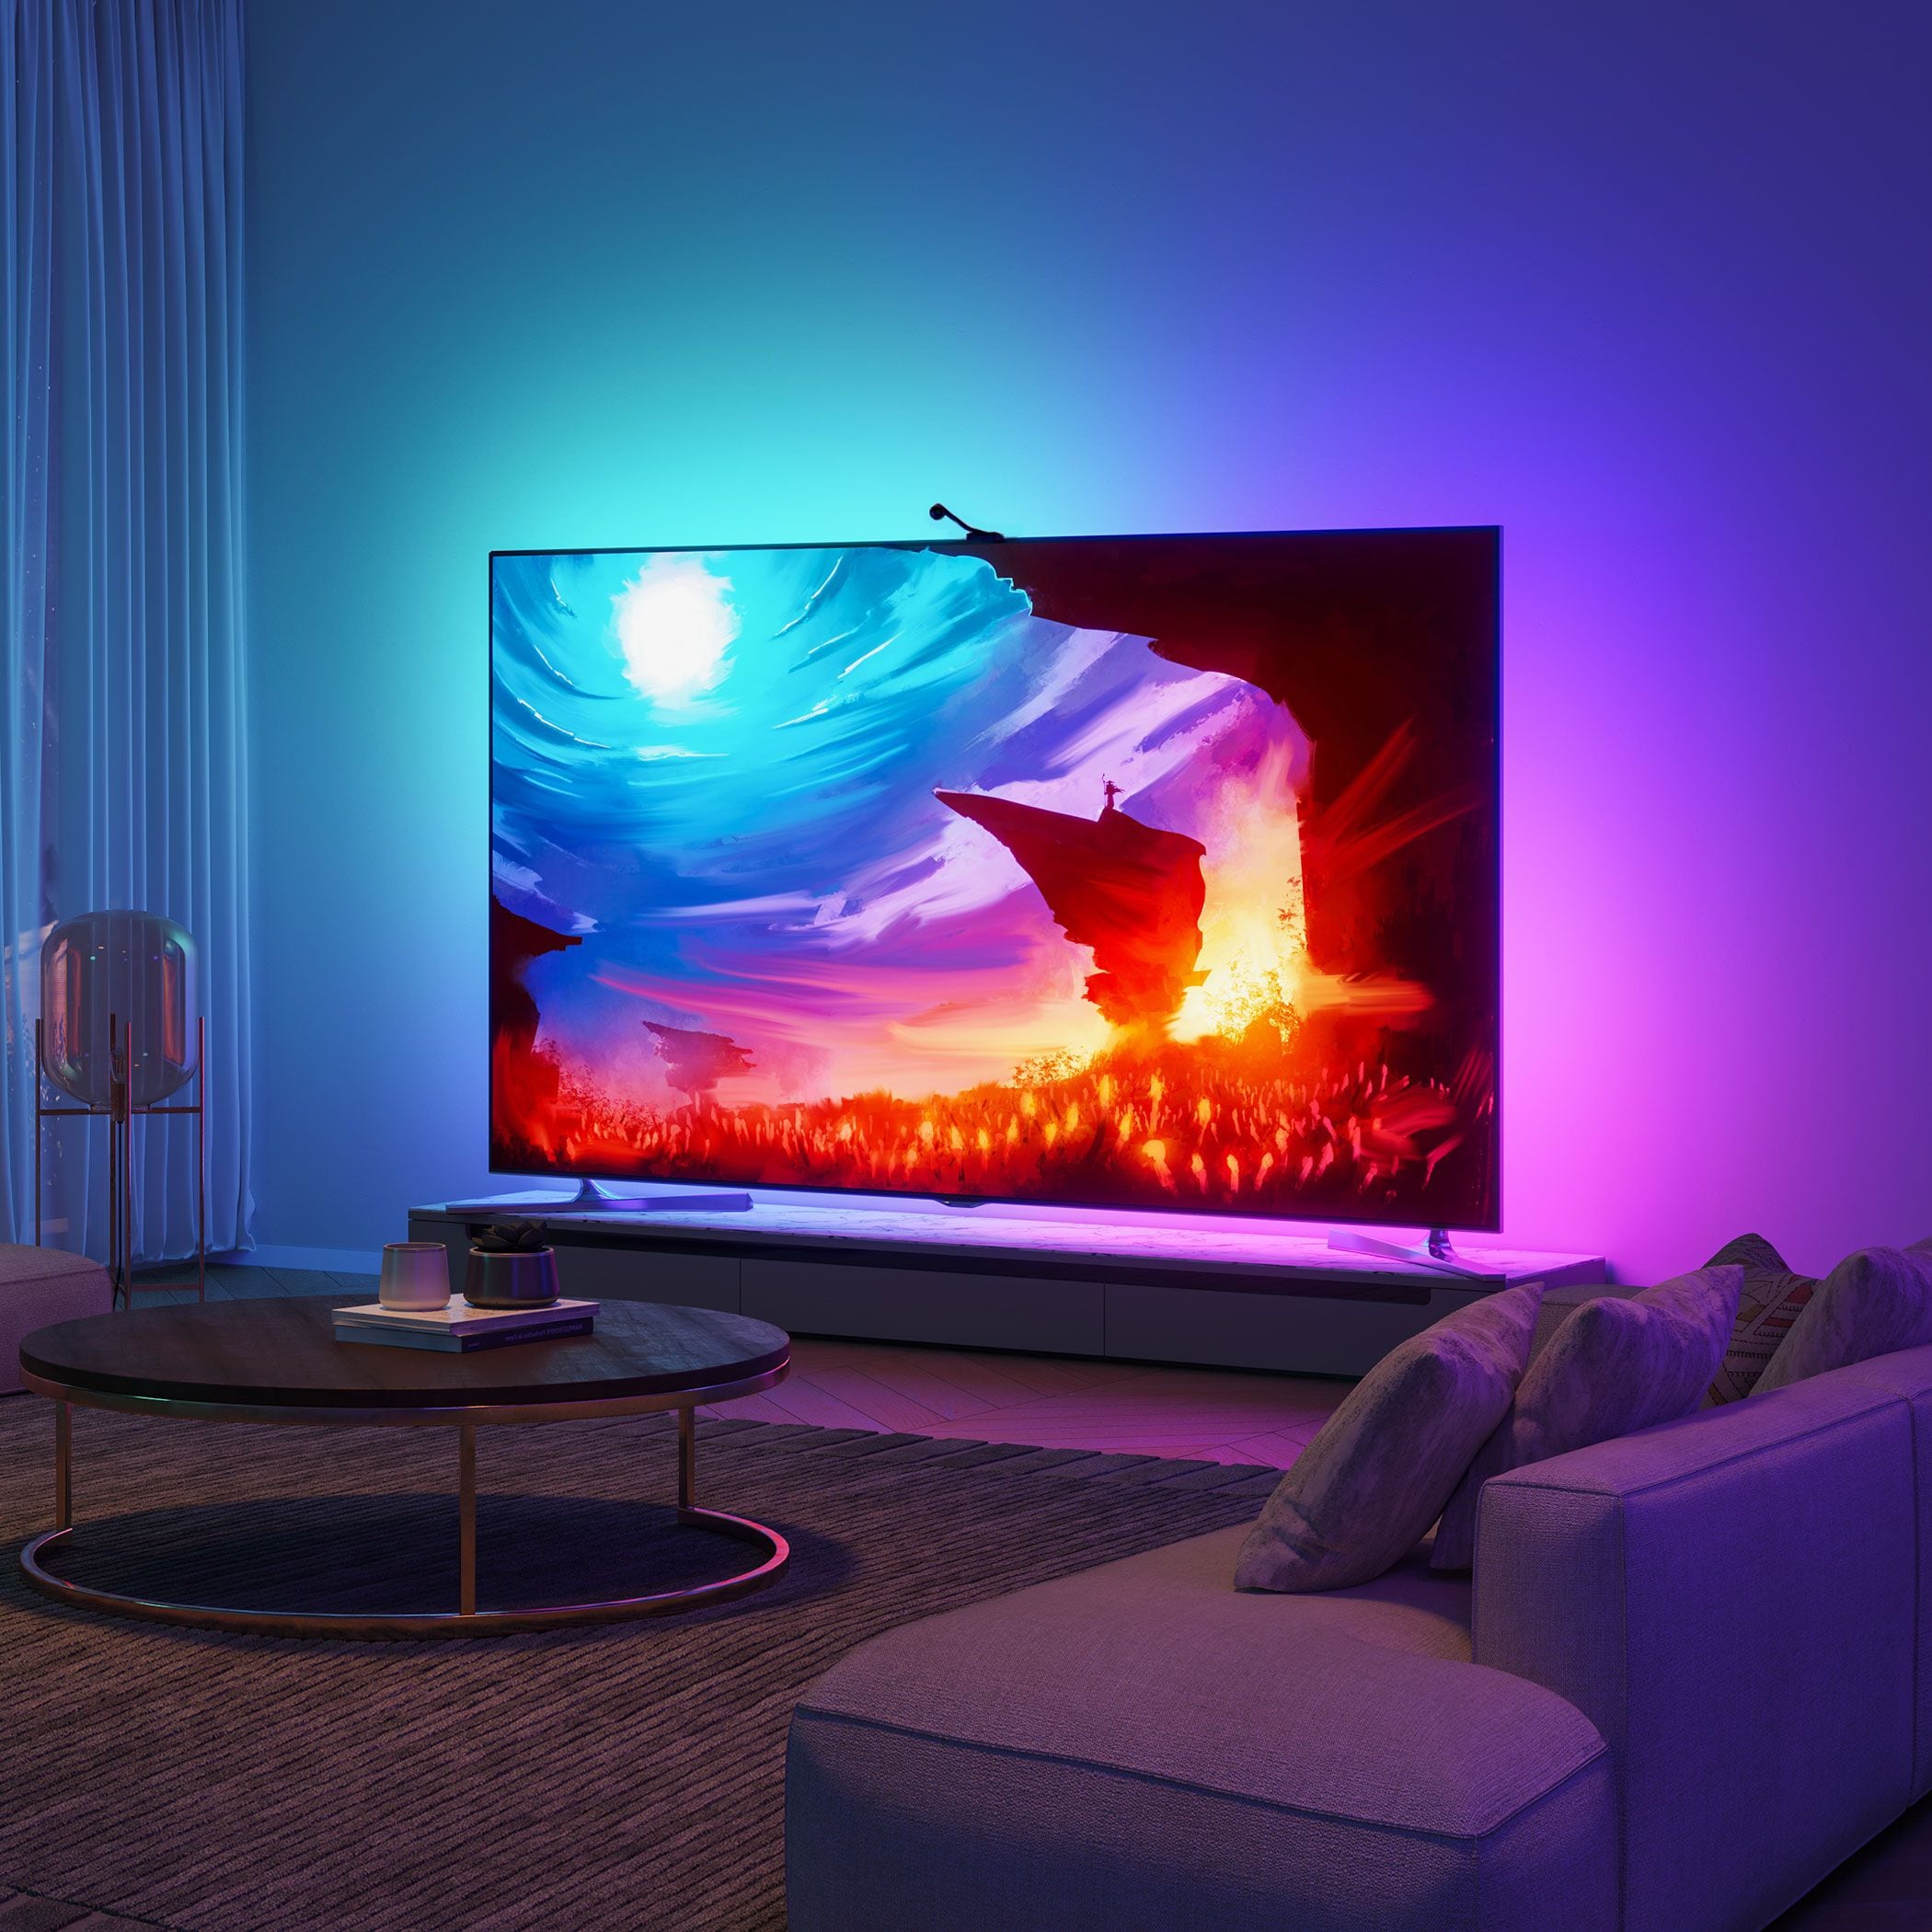 Govee Dreamview TV Strip Lights for 55”- 65” TVs H6198AD1 - Best Buy